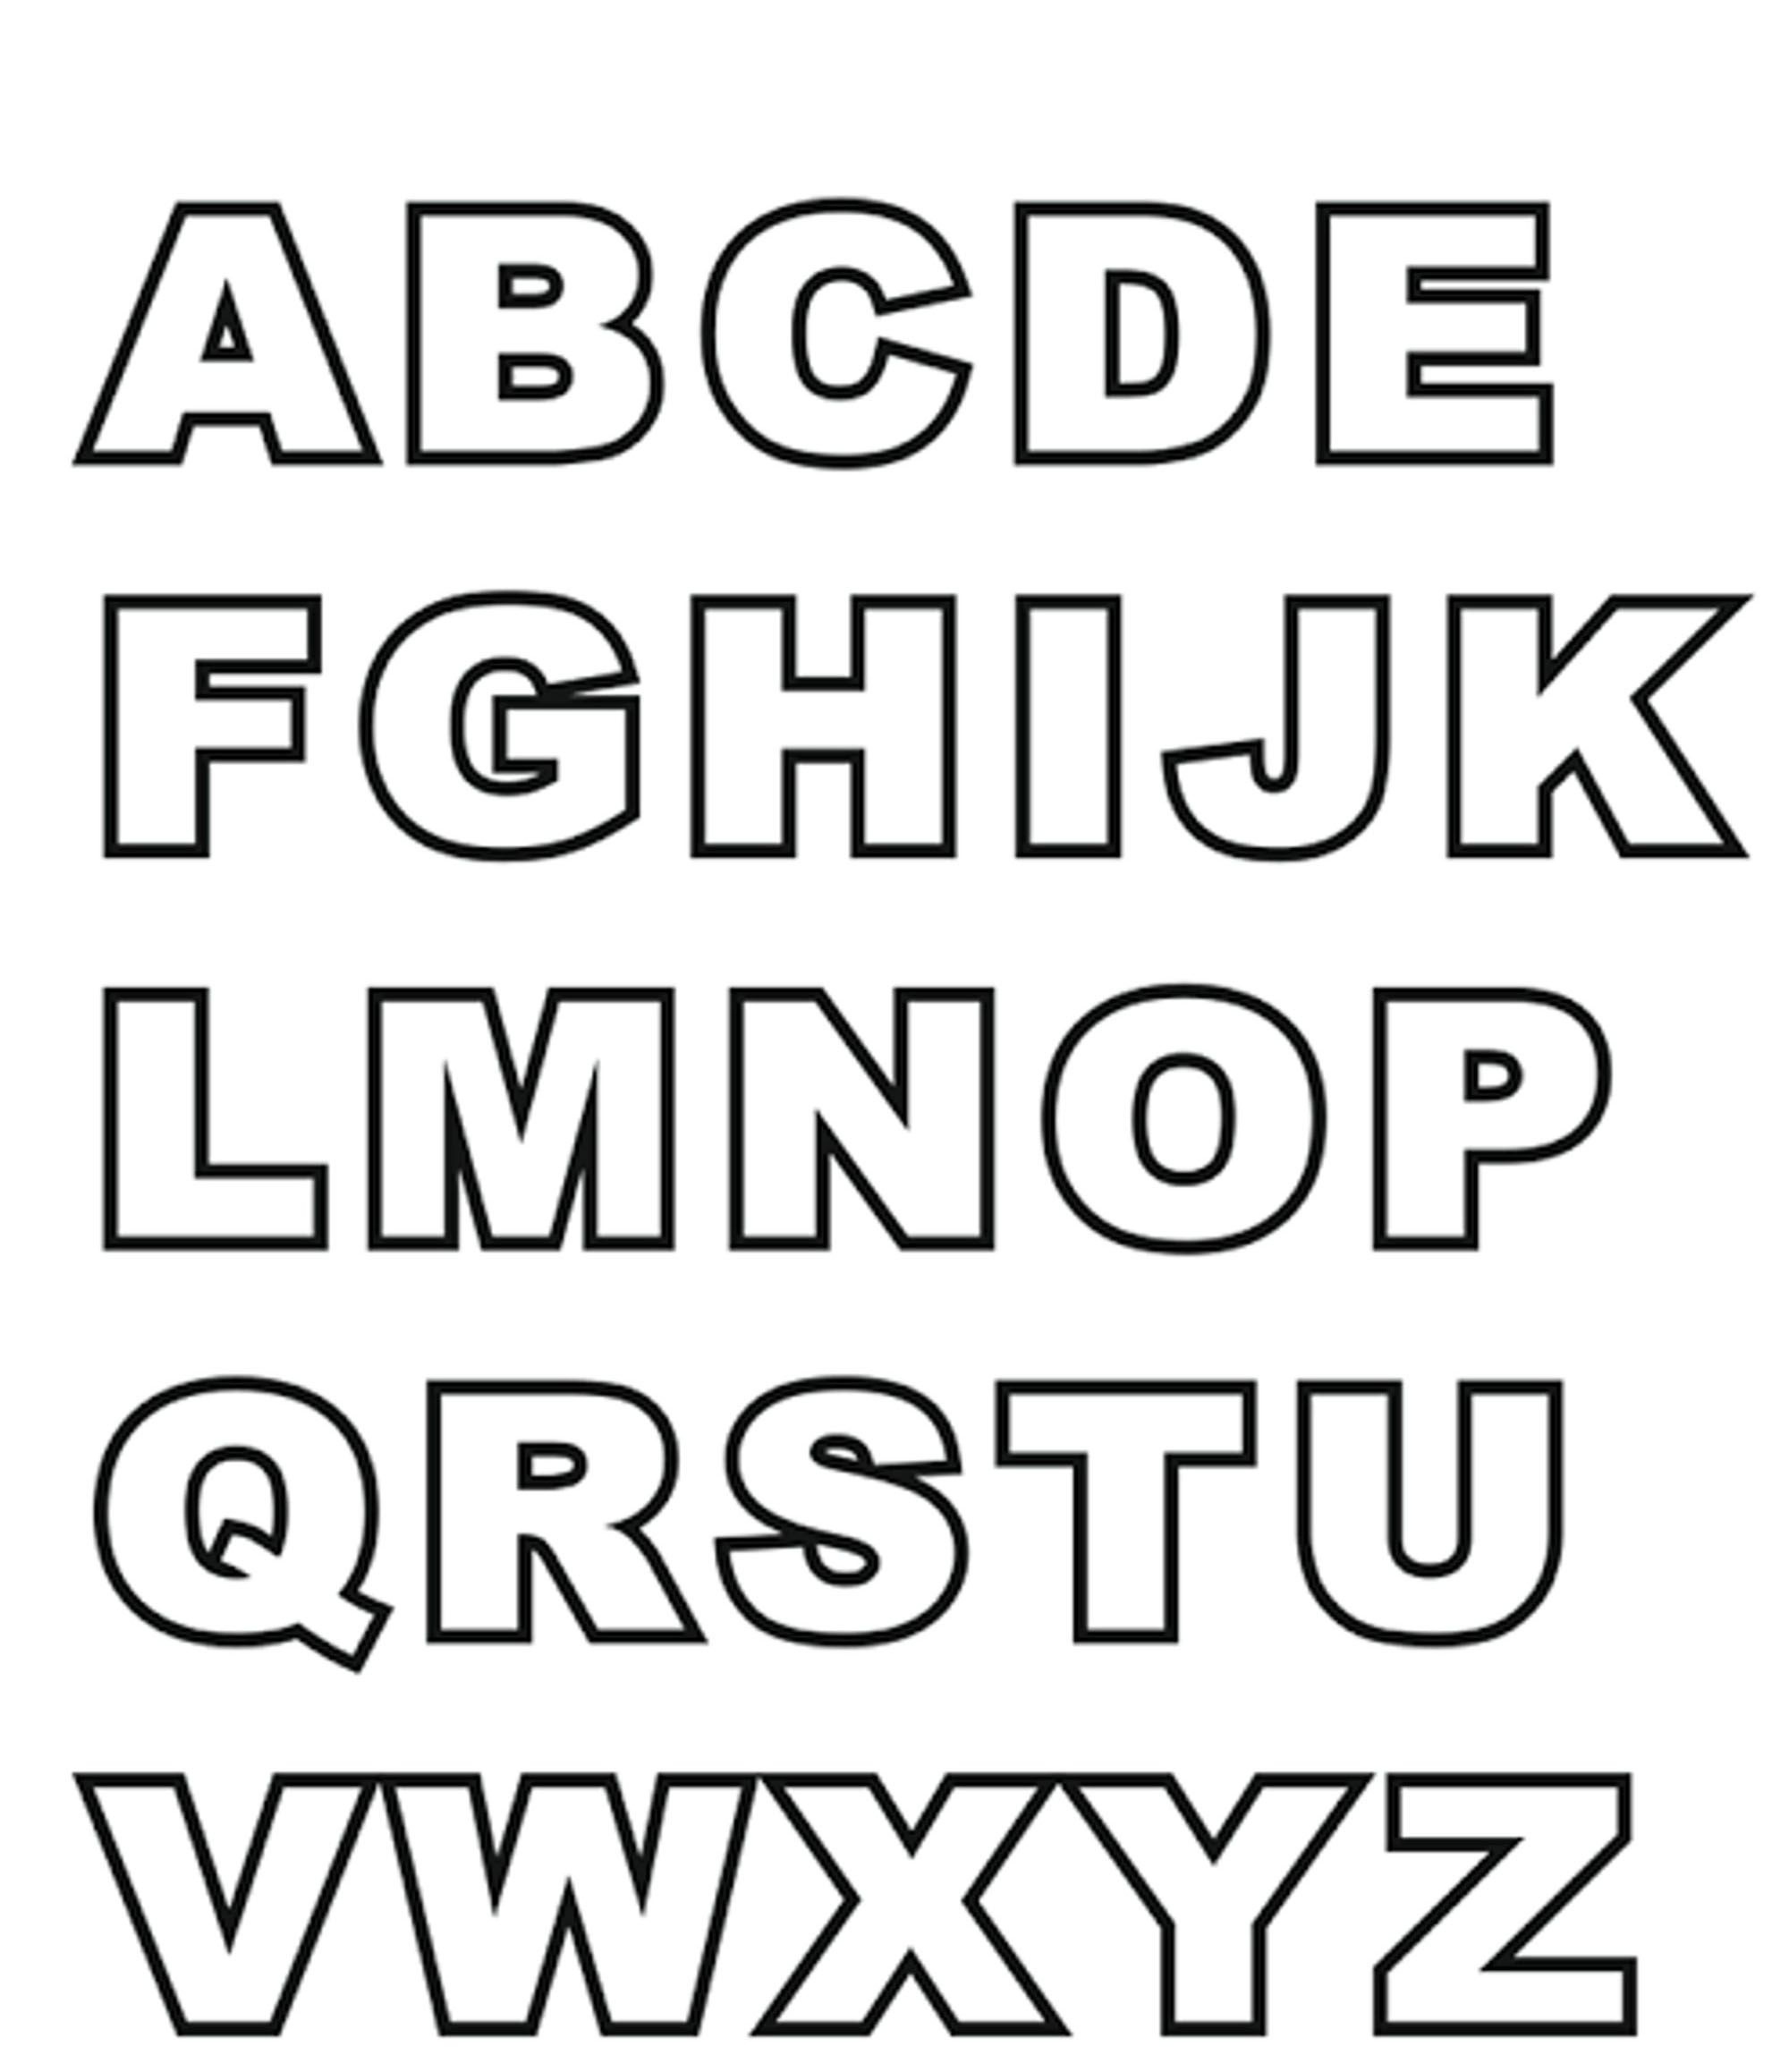 name of block letter font